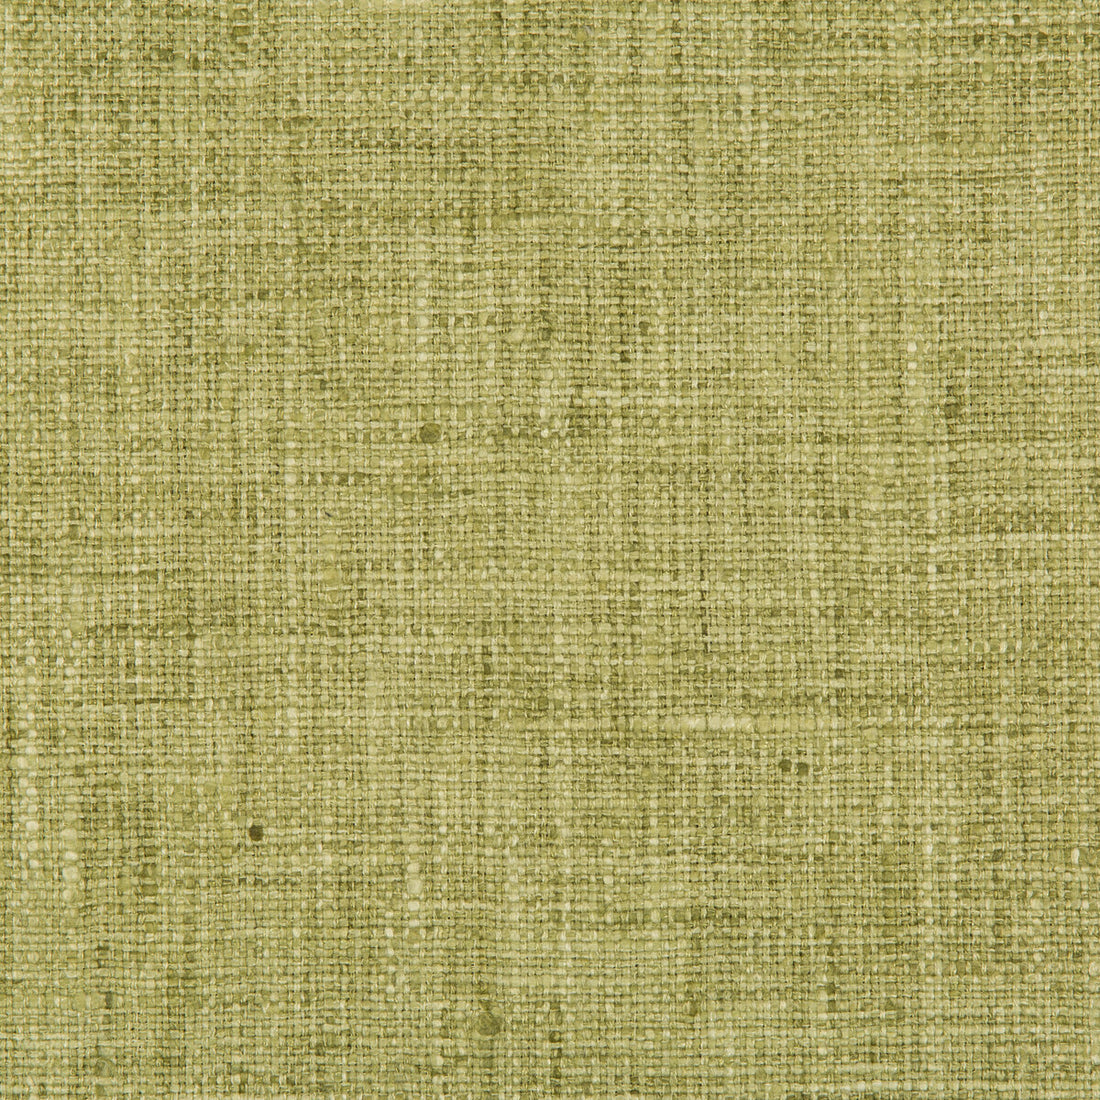 Kravet Smart fabric in 34083-13 color - pattern 34083.13.0 - by Kravet Smart